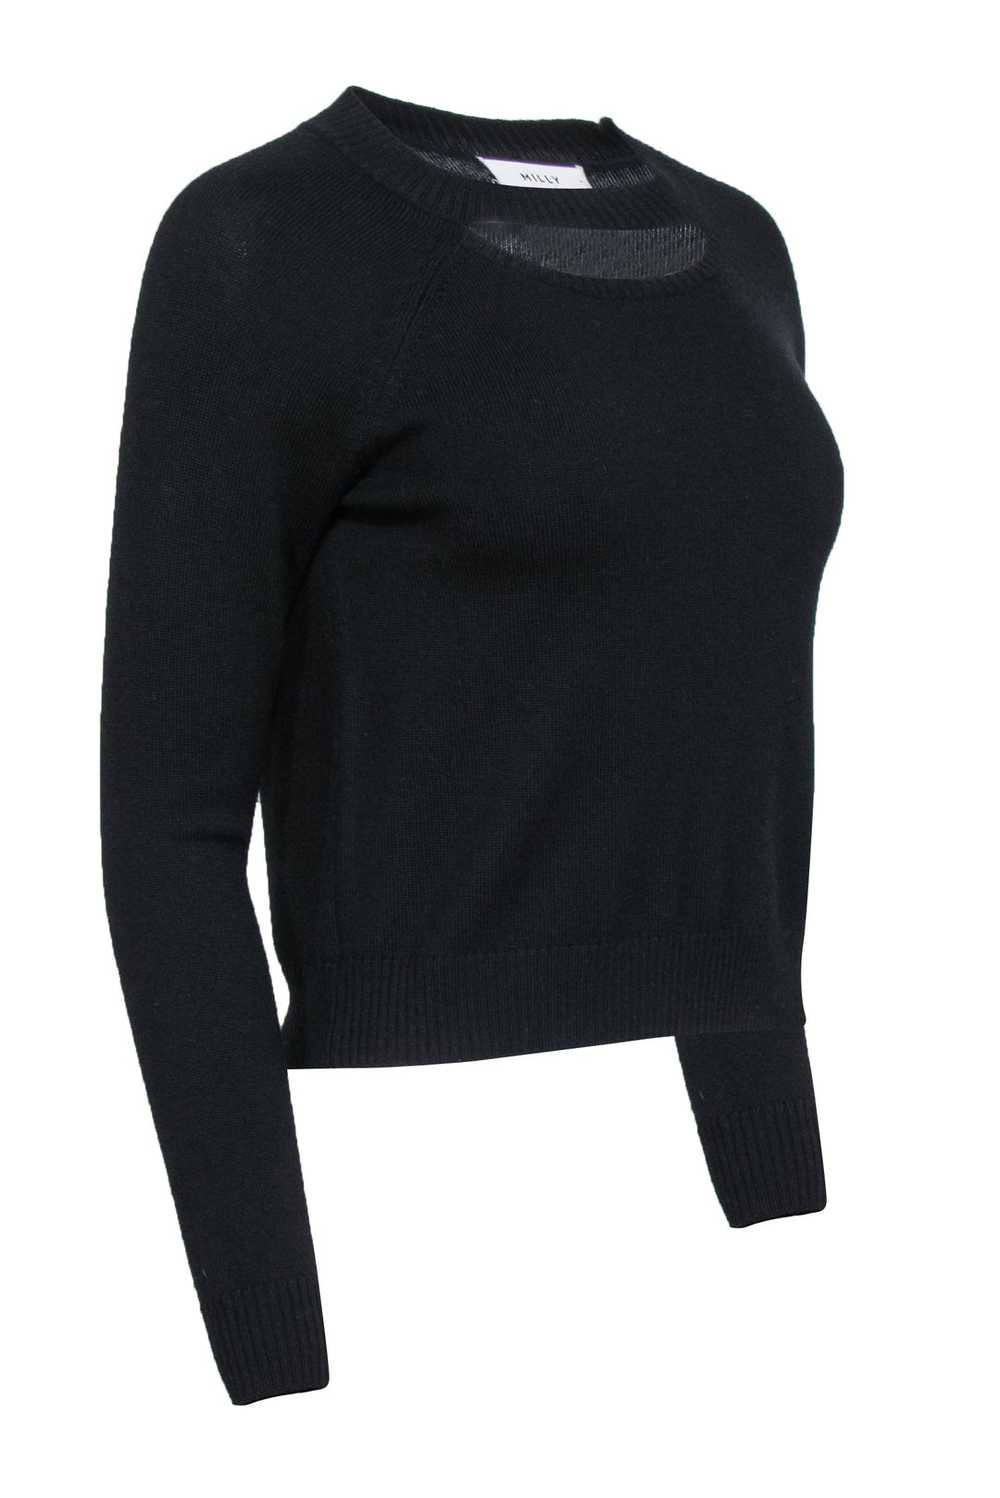 Milly - Black Wool Sweater w/ Cutout Sz P - image 2